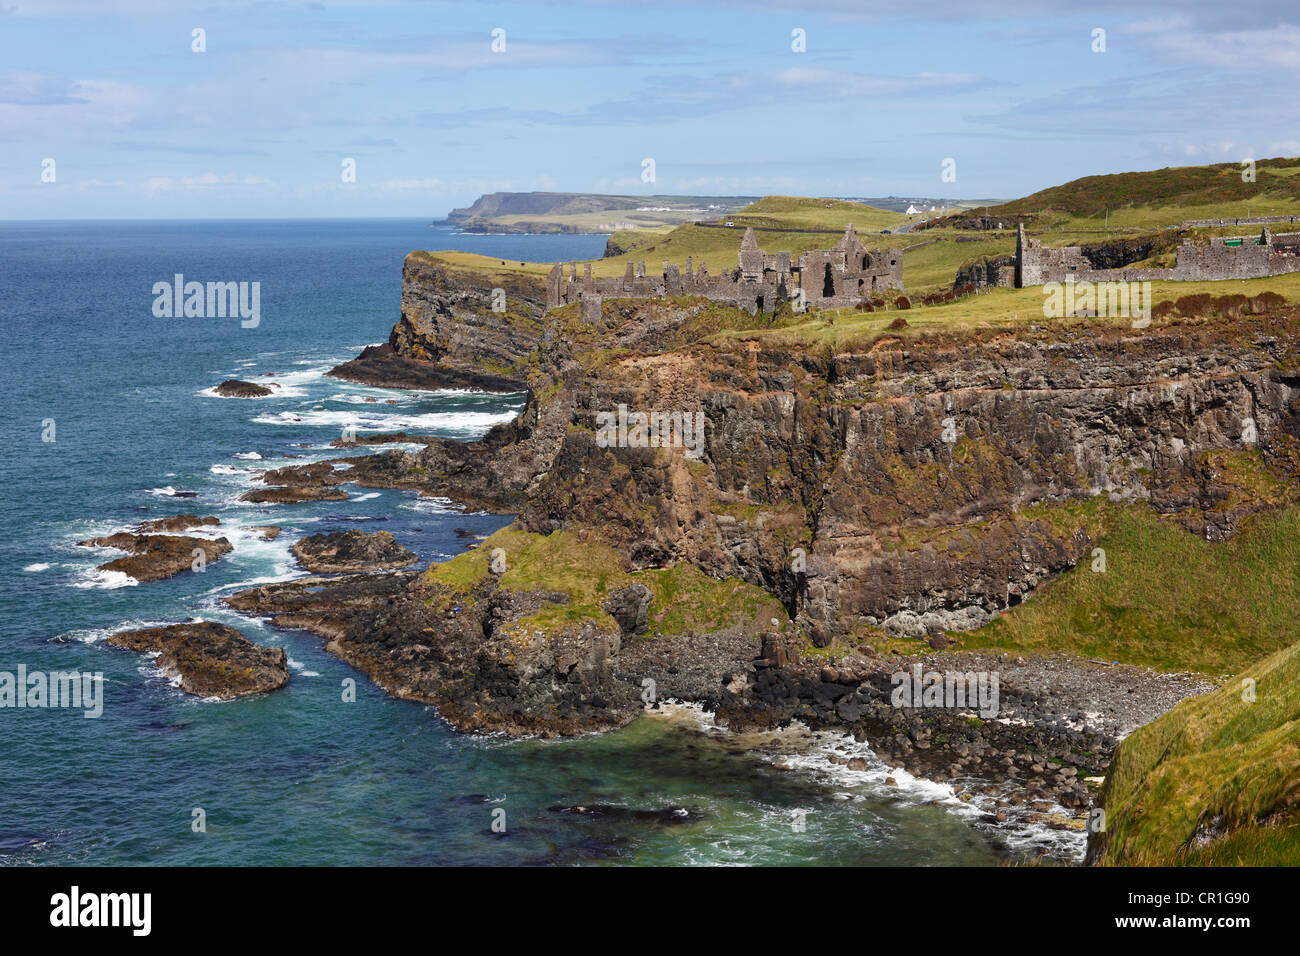 Dunluce Castle, Antrim Coast, County Antrim, Northern Ireland, Great Britain, Europe Stock Photo